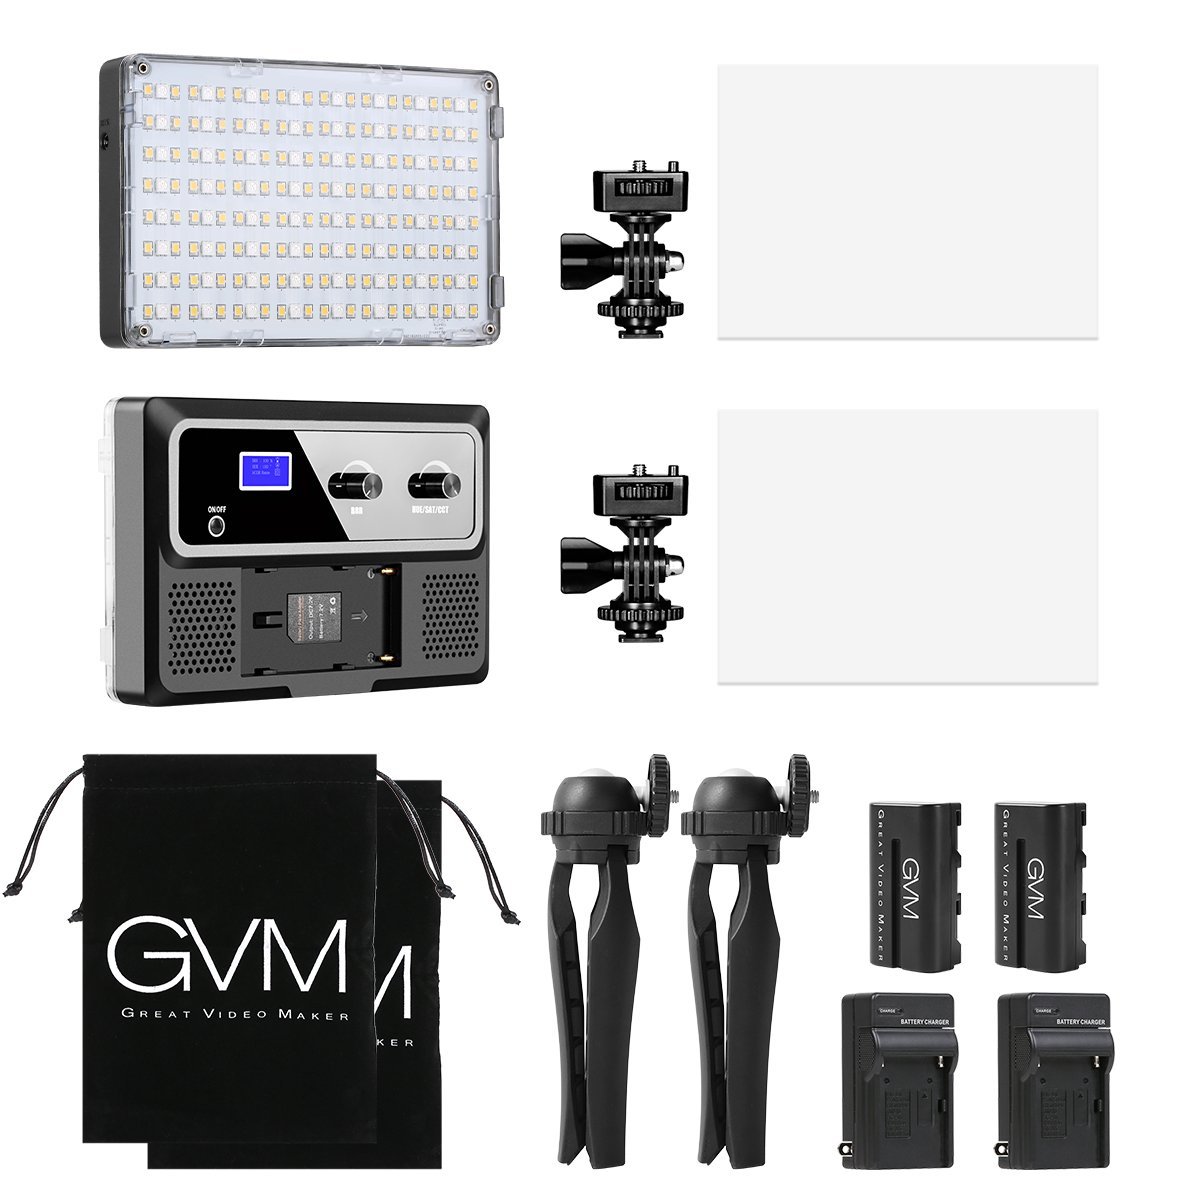 GVM RGB-10S2L Professional Video on Camera Video Light 2 Light Kit with Control Knob - GVMLED